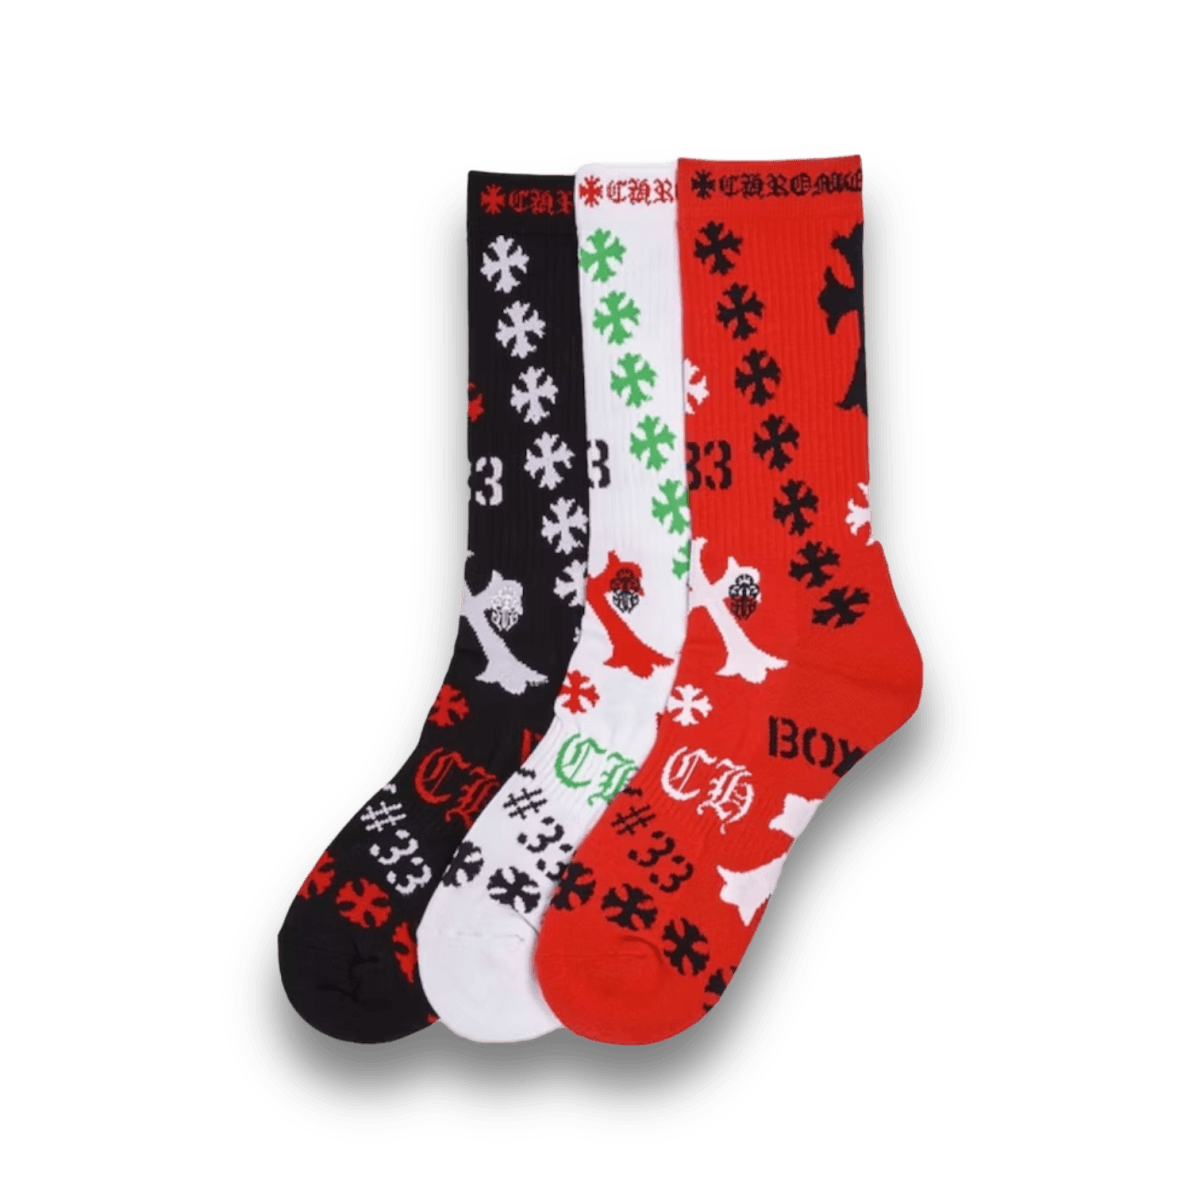 Chrome Hearts Stencil Socks Red - Accessories - Jawns on Fire Sneakers & Streetwear